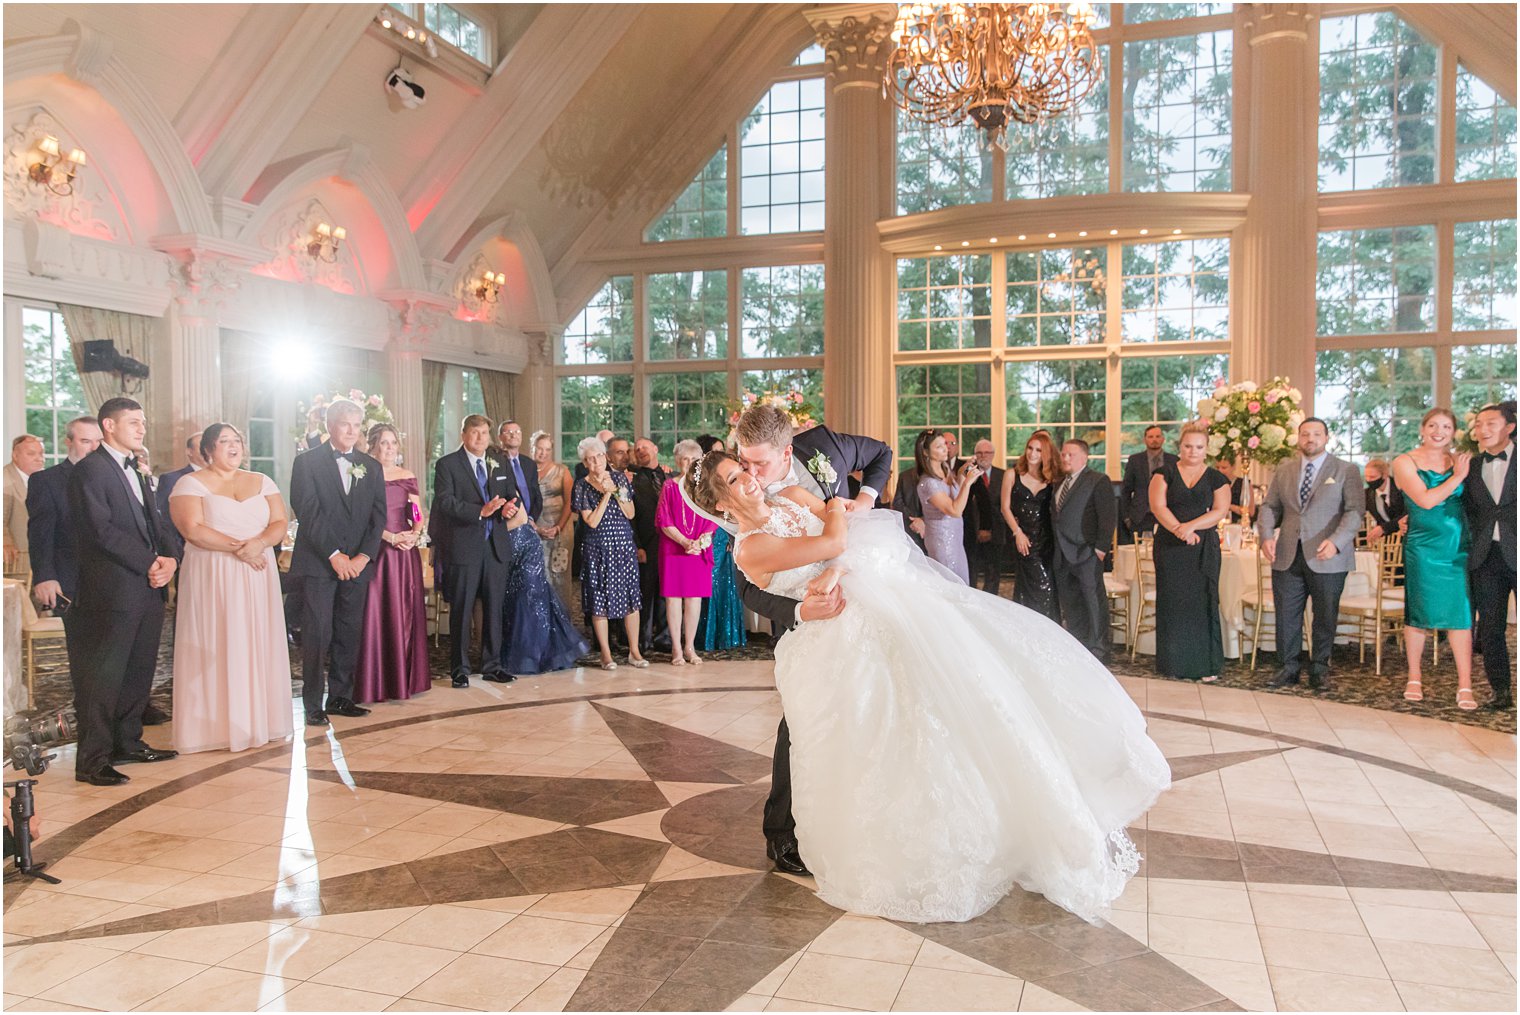 groom dips bride during first dance at Allentown NJ wedding reception